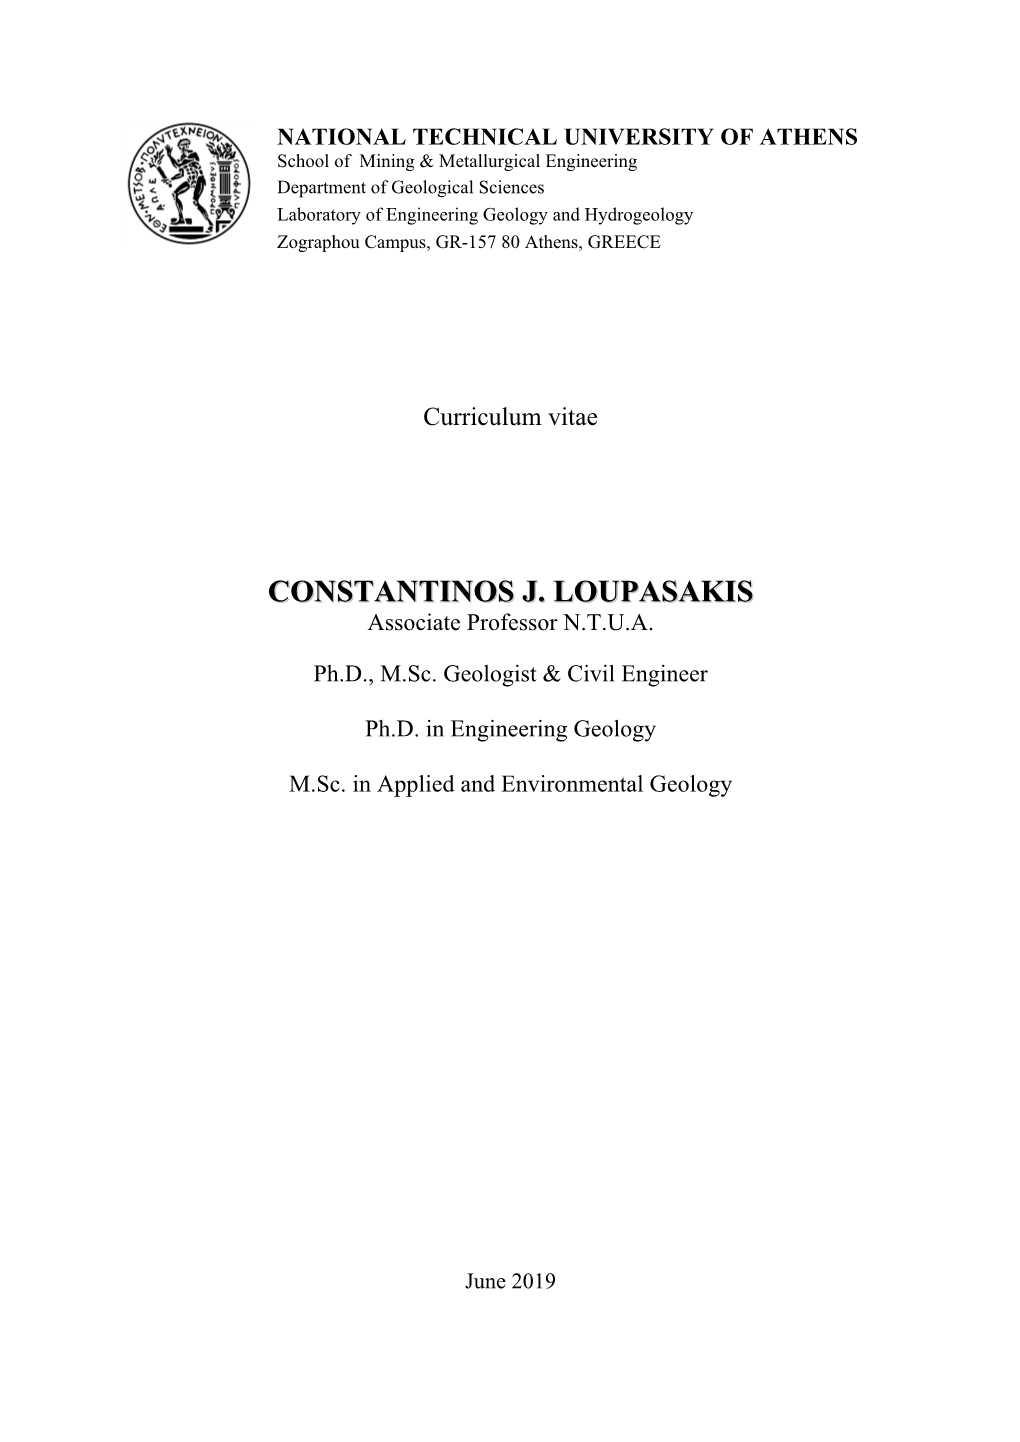 CONSTANTINOS J. LOUPASAKIS Associate Professor N.T.U.A